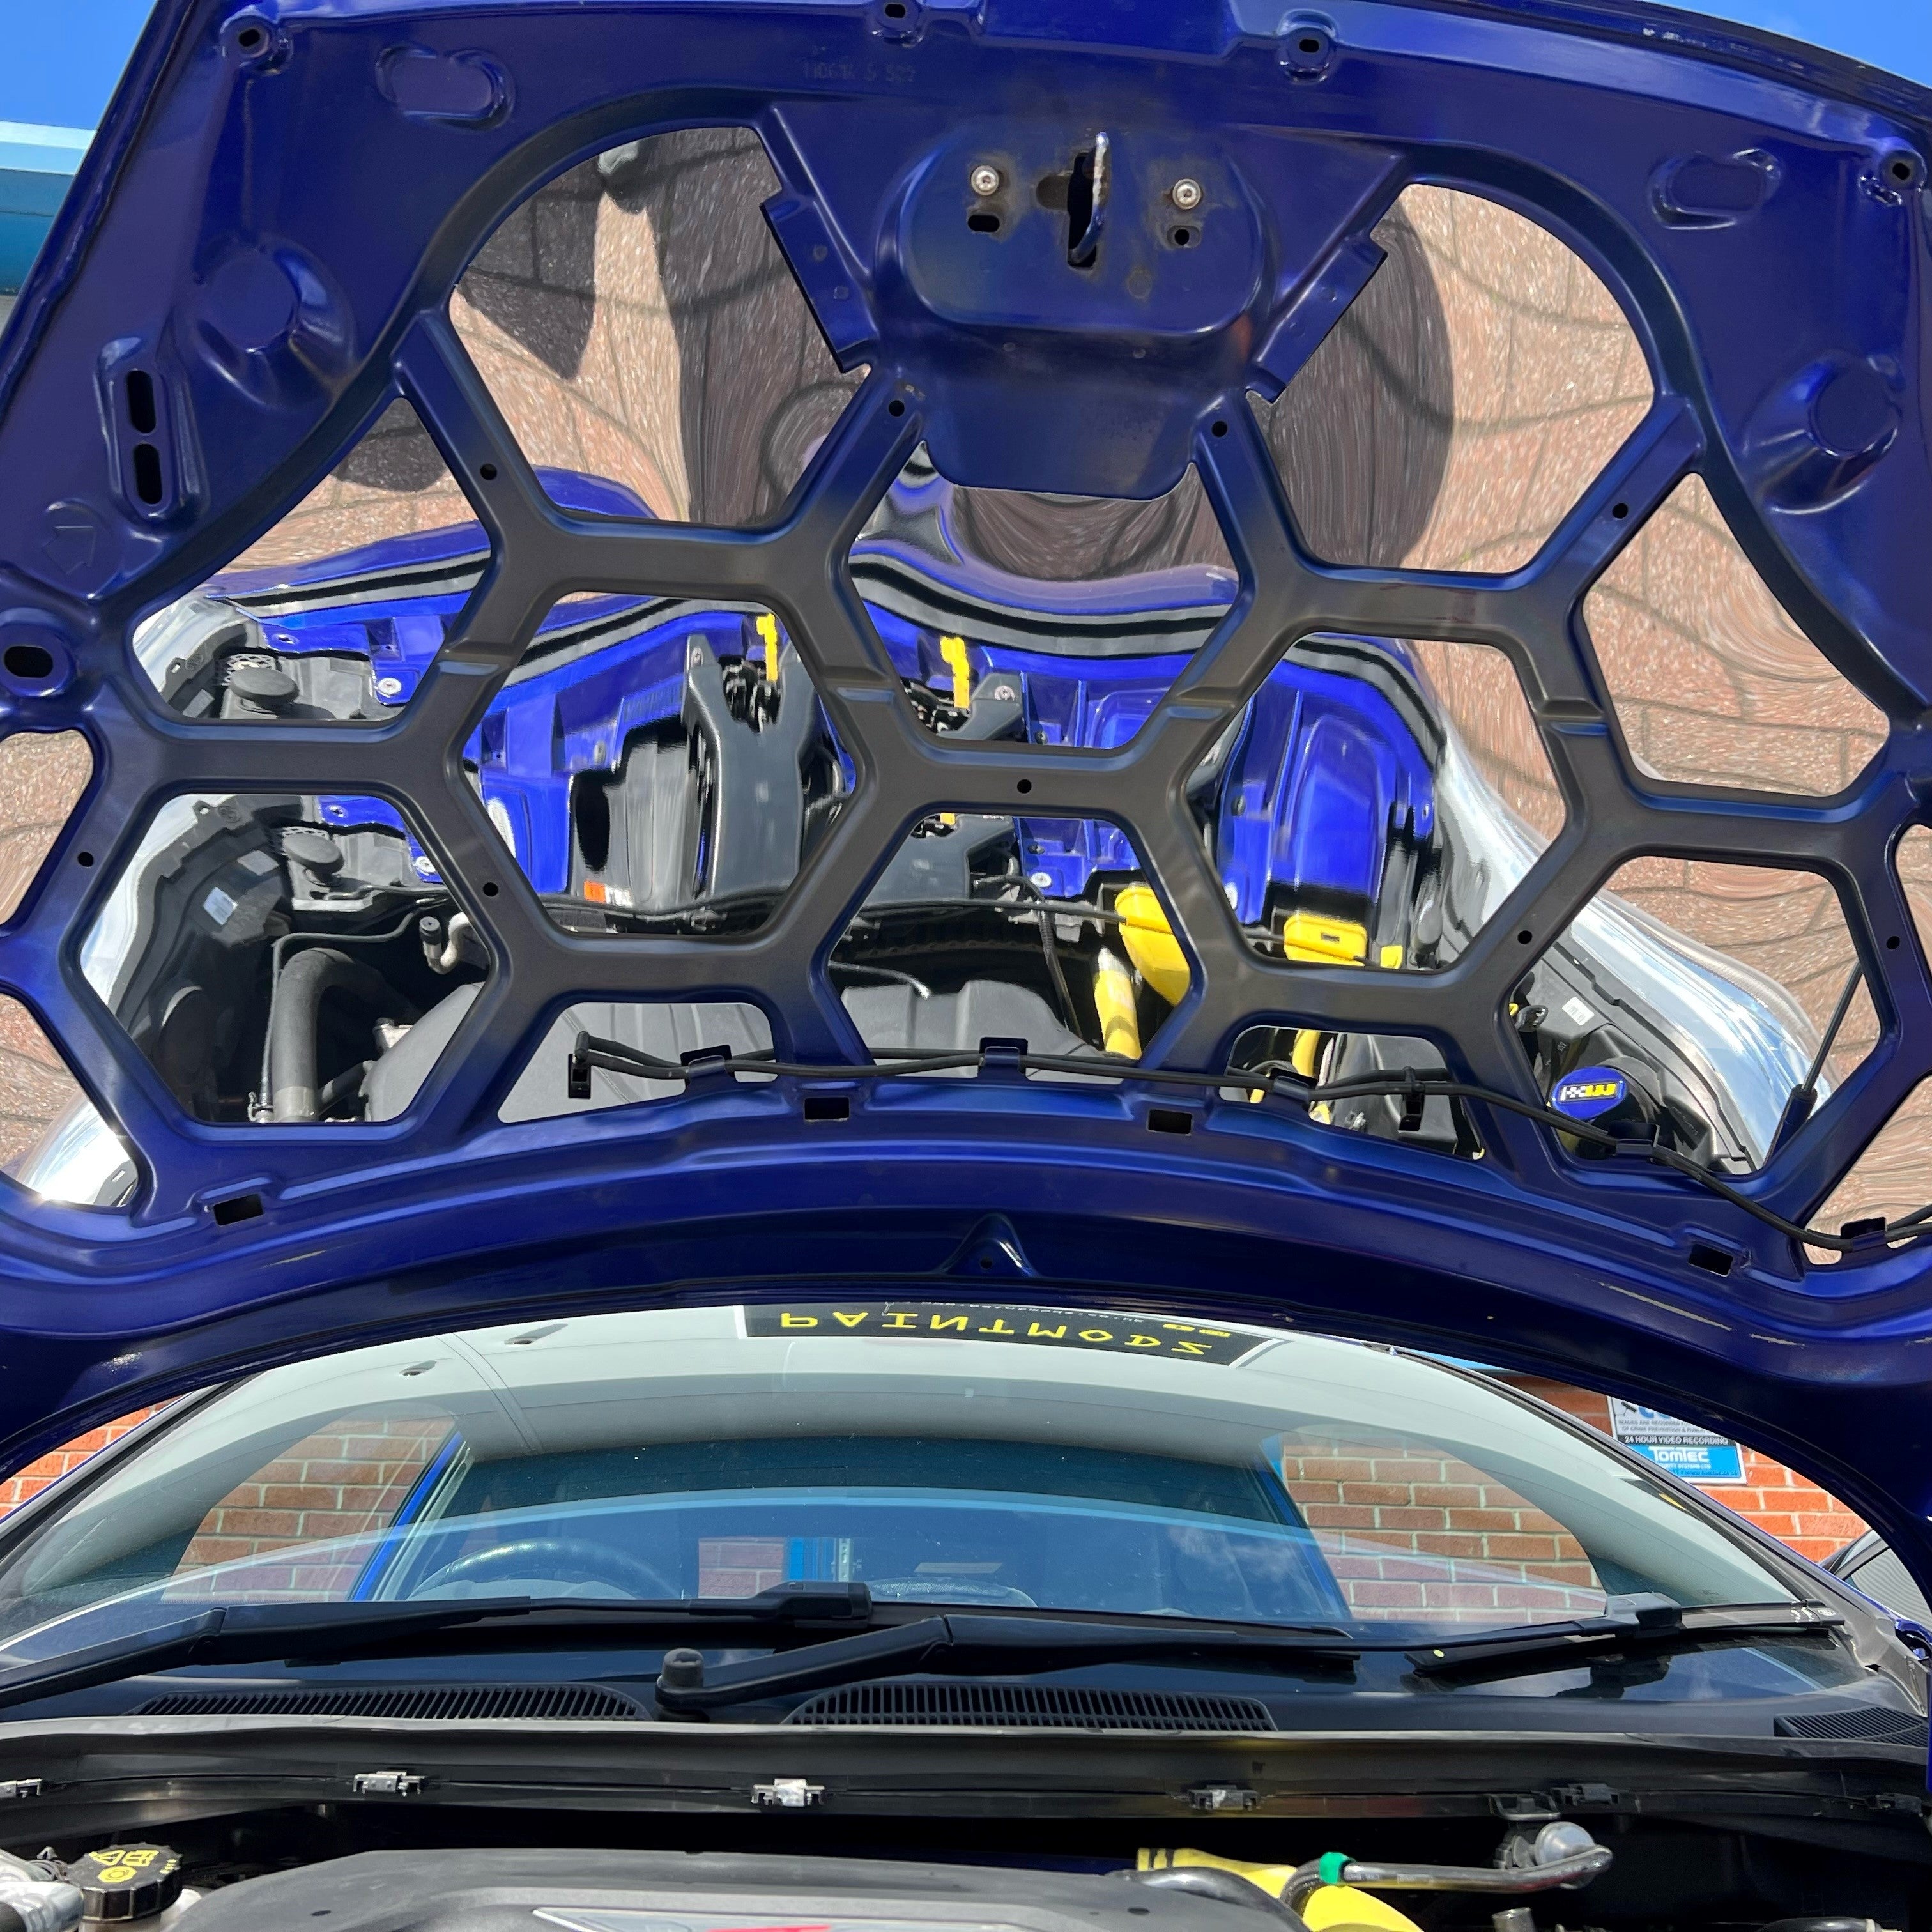 Proform Under Bonnet Panels / Plates - Mk7.5 Fiesta